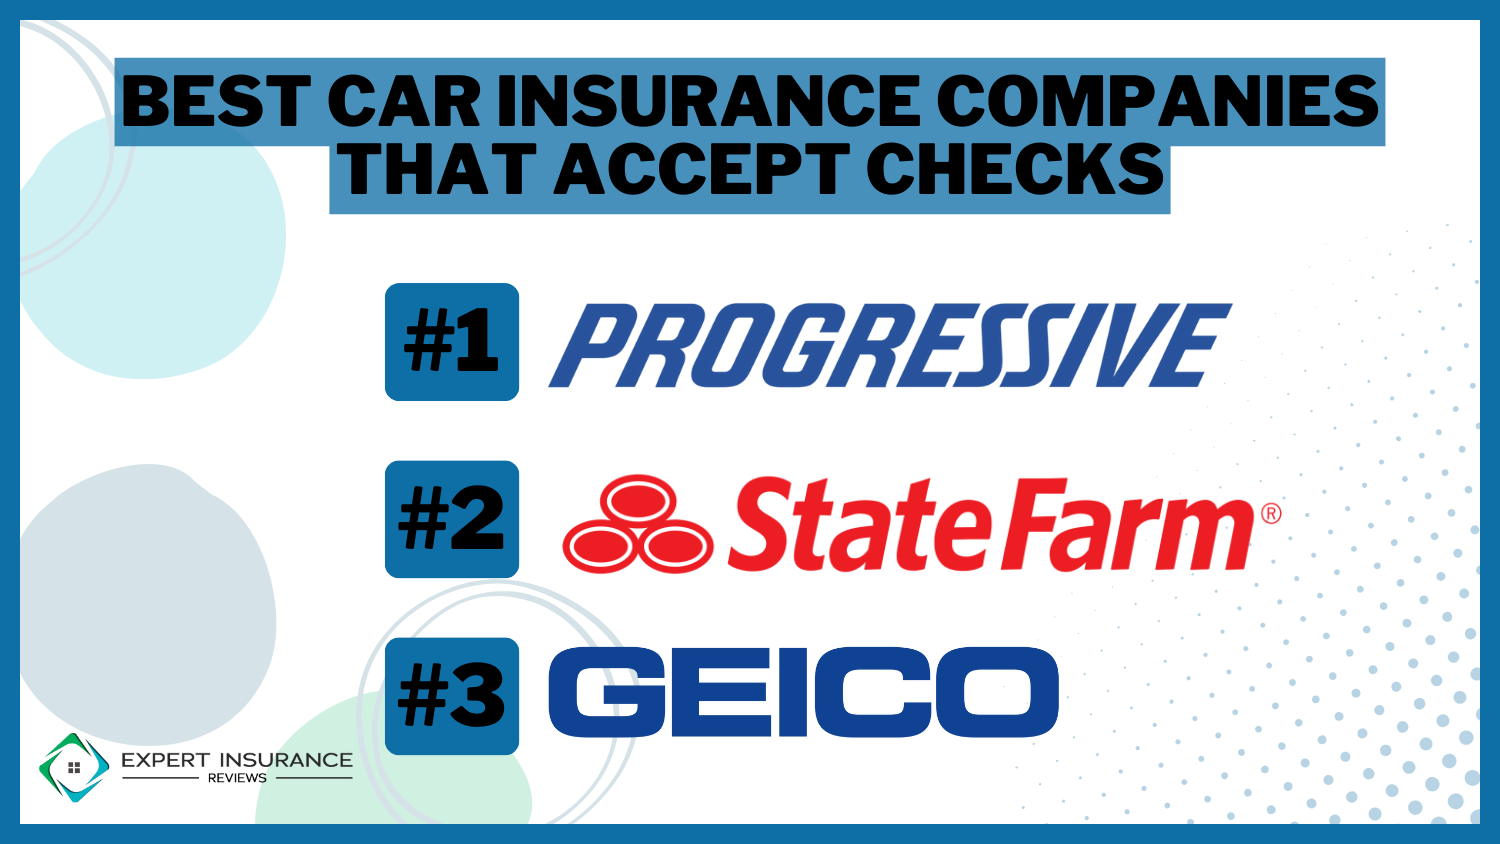 Best Car Insurance Companies that Accept Checks: Progressive, State Farm, and Geico